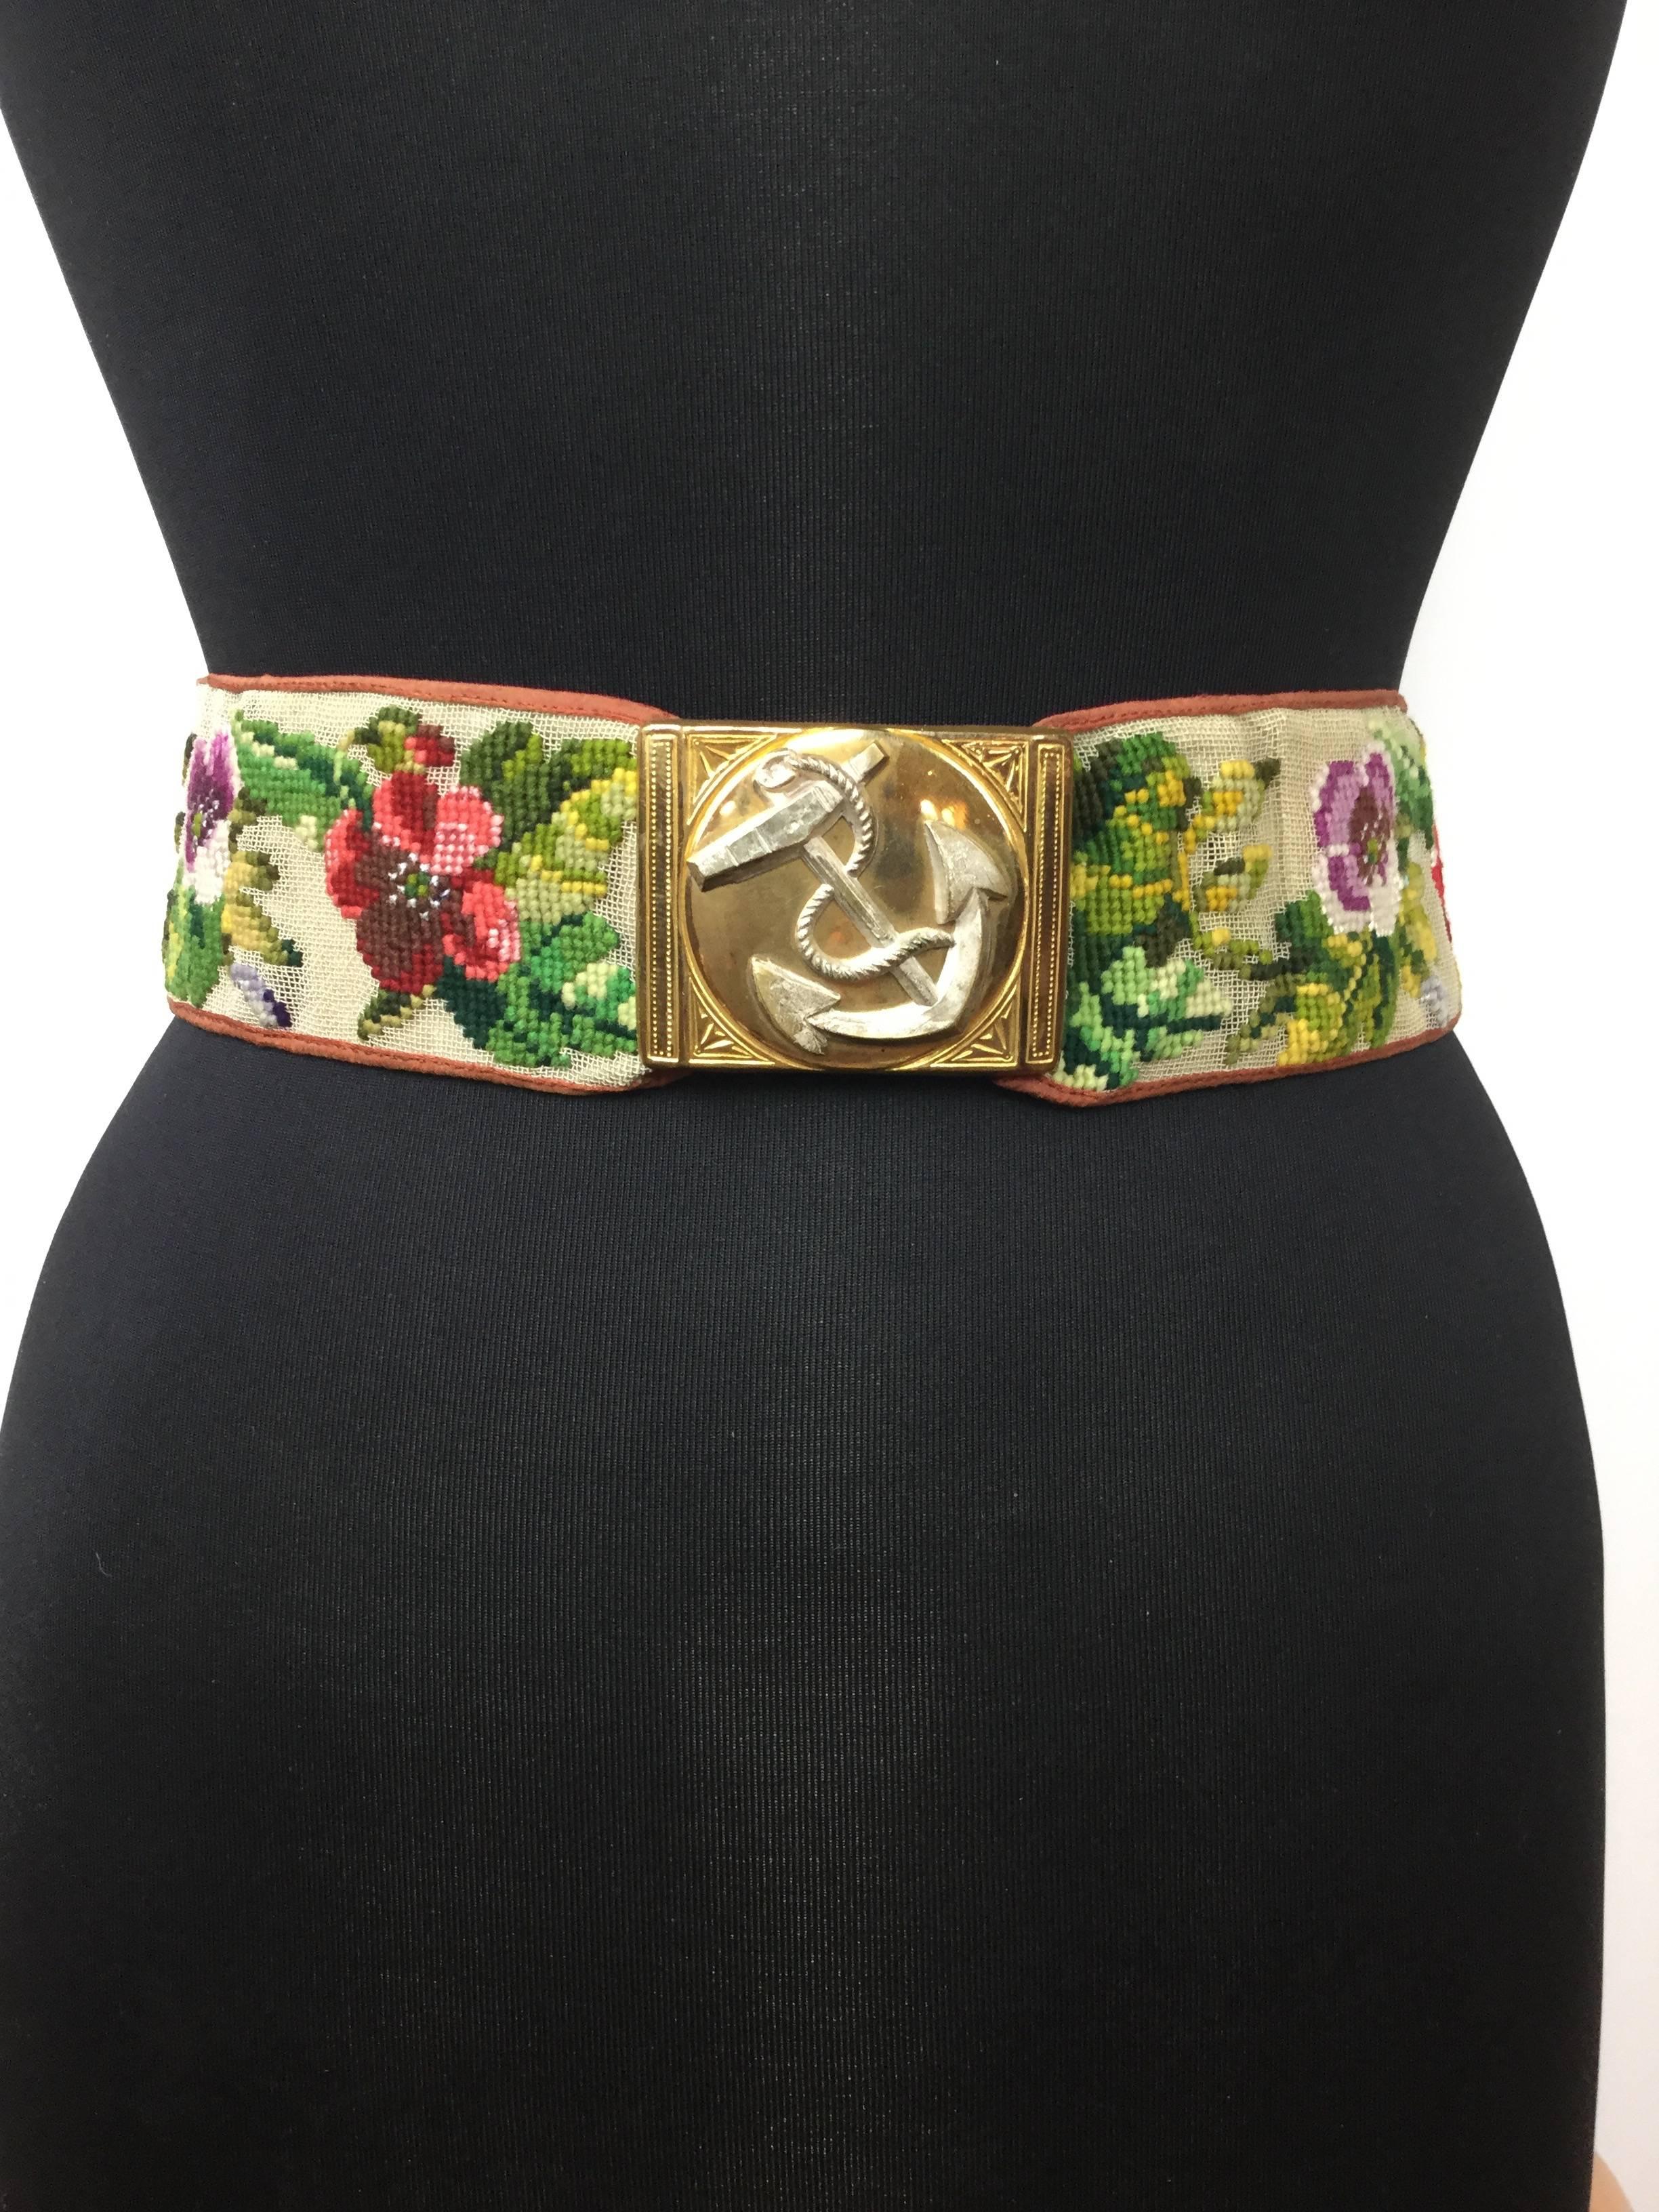 gucci floral belt